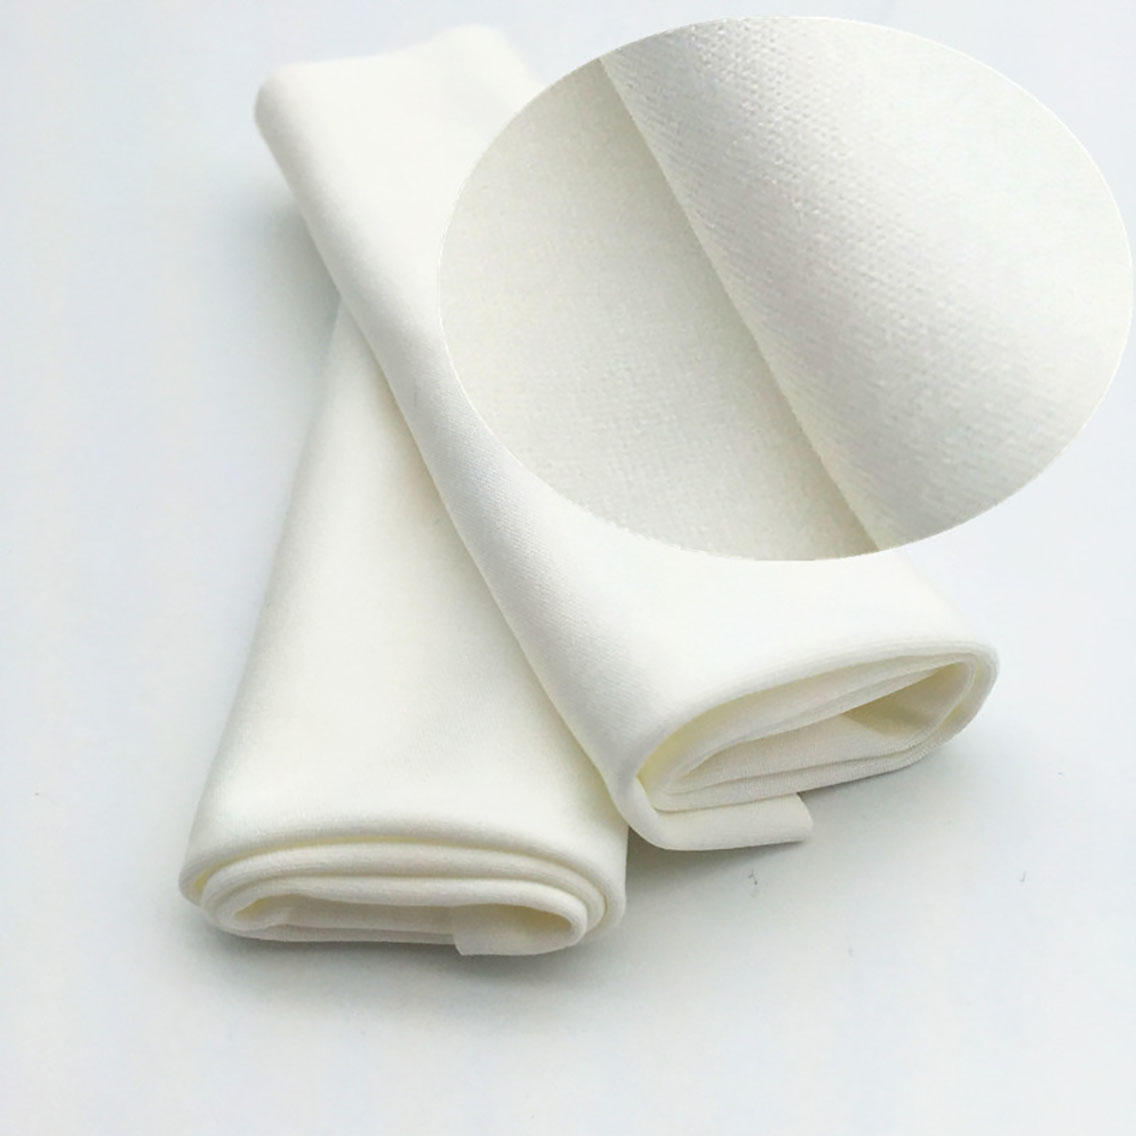 Cleanmo Brand microfiber dimensional cleanroom lens wipes manufacture